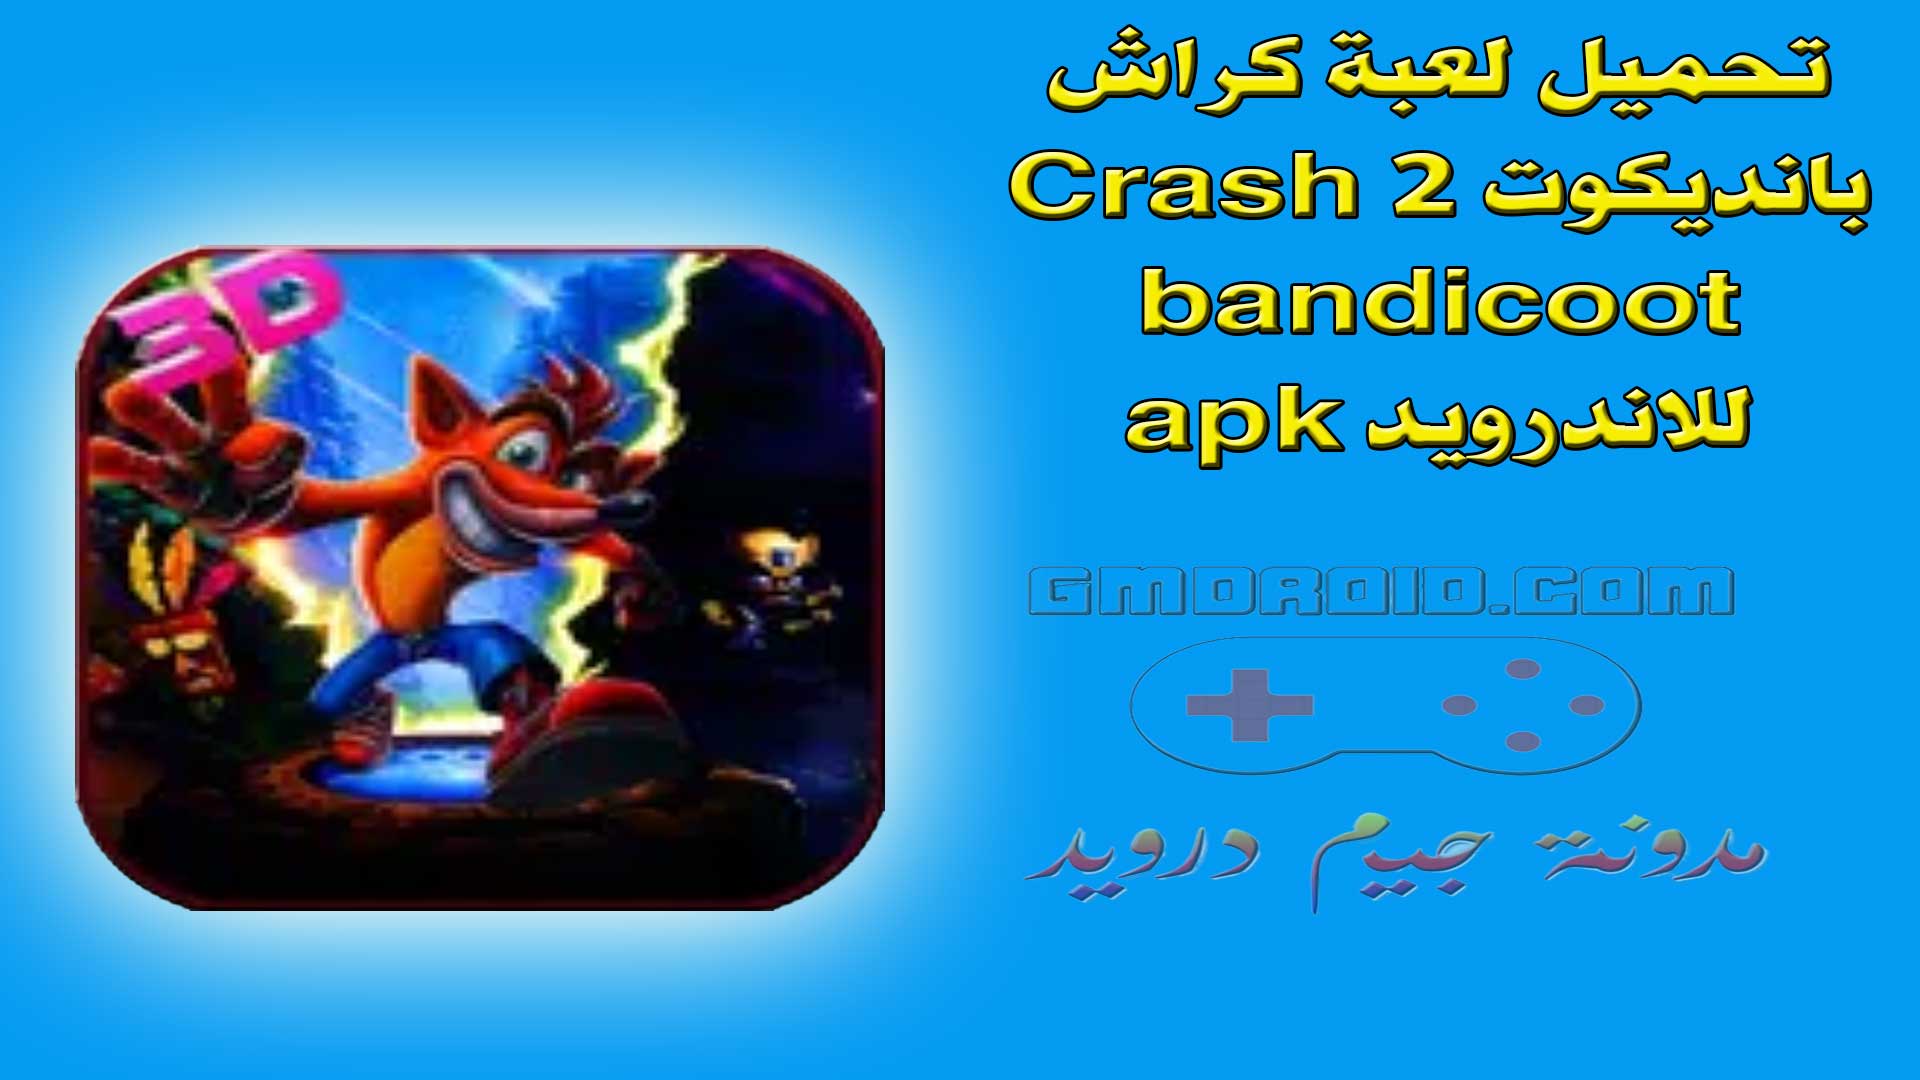 تحميل لعبة كراش بانديكوت 2 Crash bandicoot للاندرويد apk